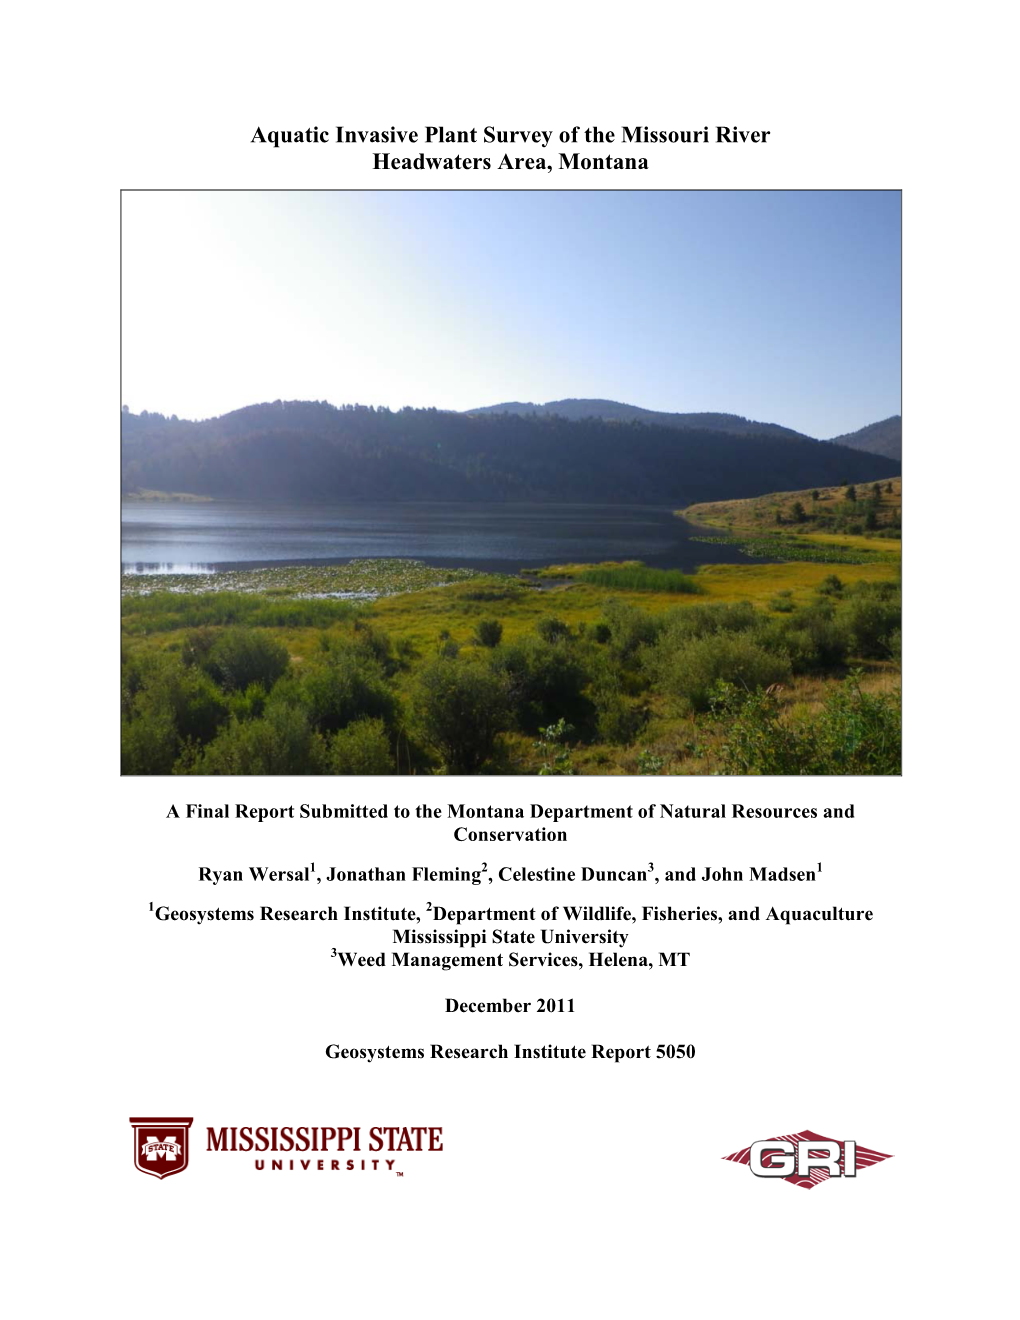 Aquatic Invasive Plant Survey of the Missouri River Headwaters Area, Montana